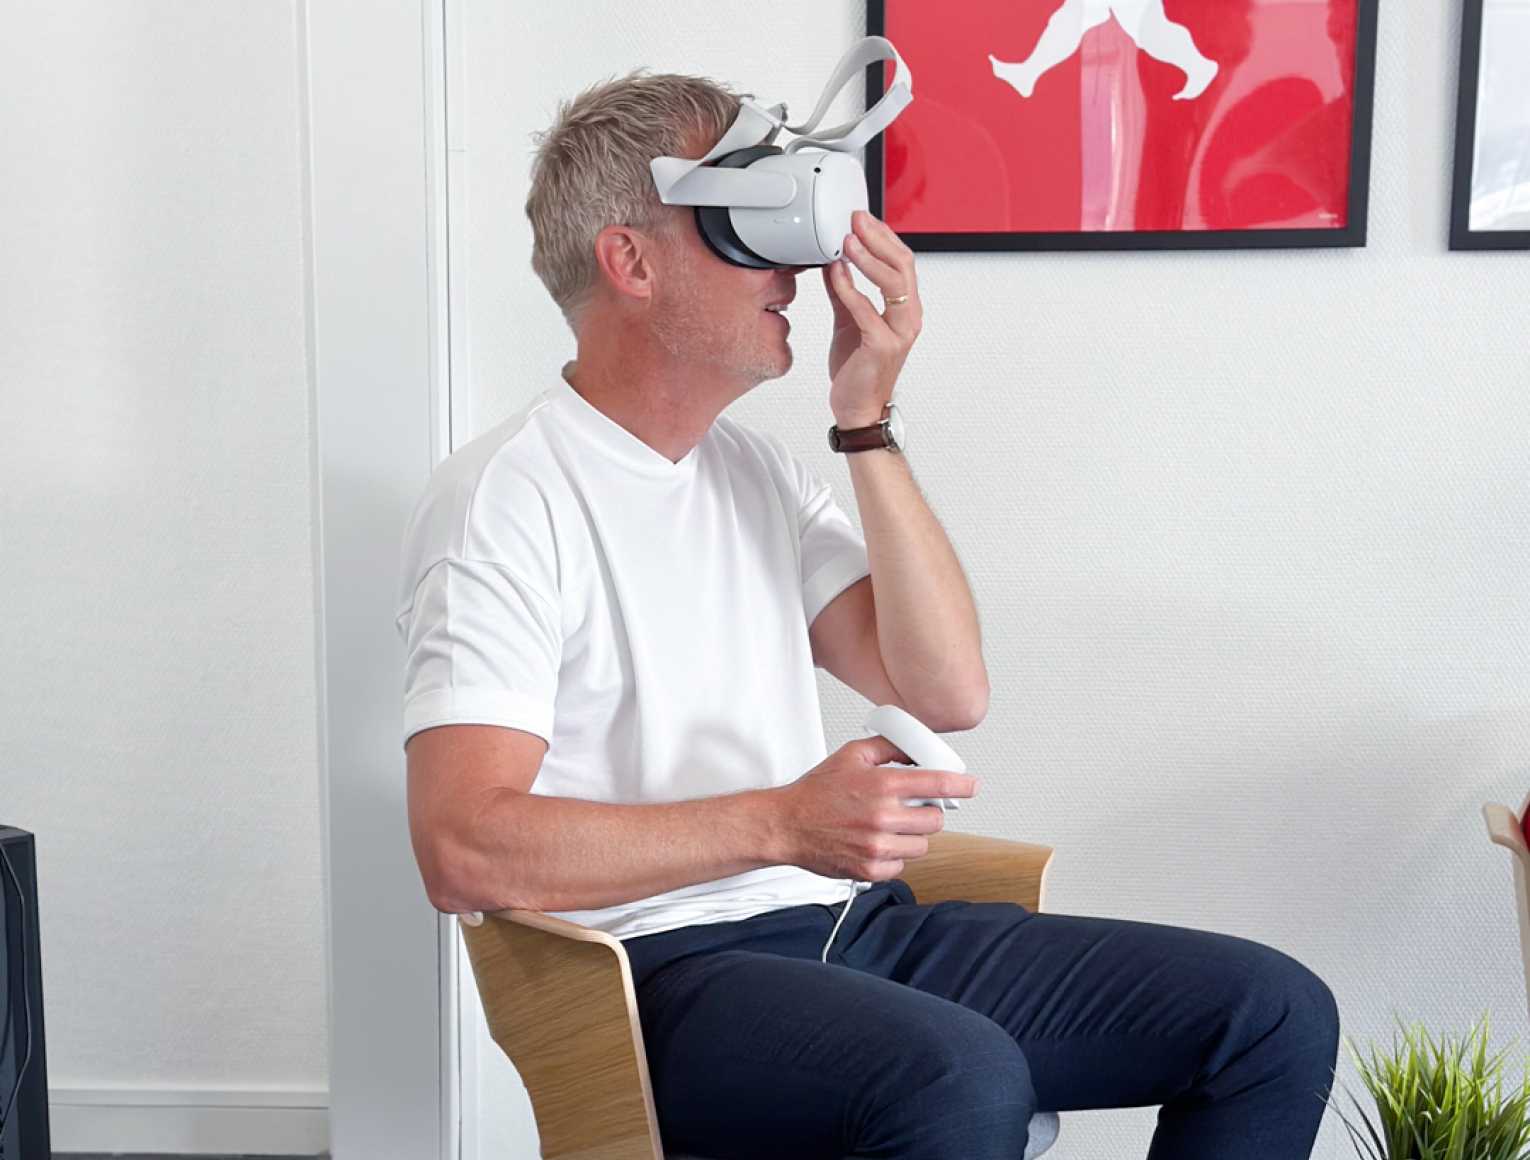 Andreas med VR headset